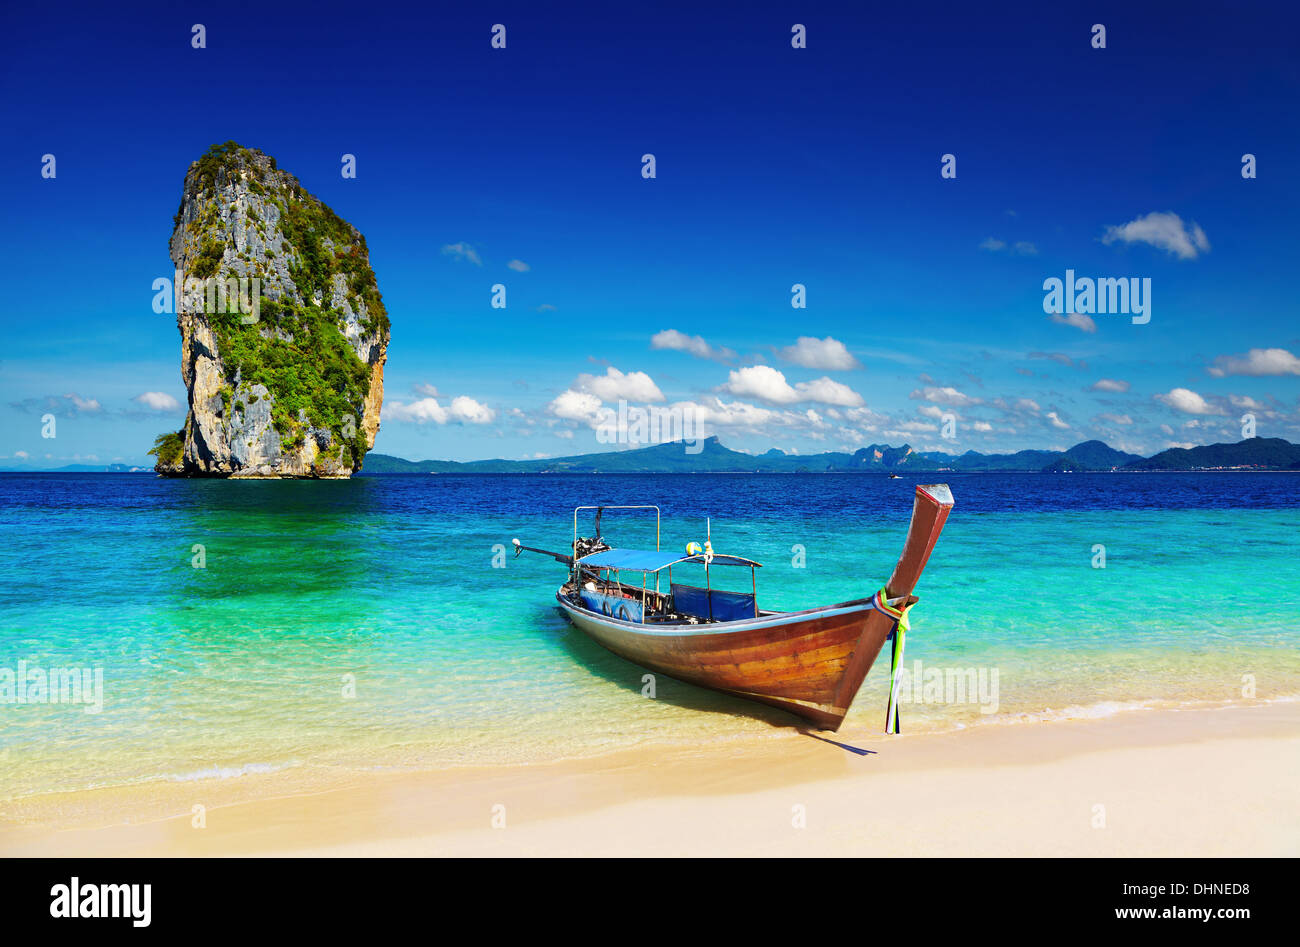 Bote de Cola Larga, Playa Tropical, Mar de Andaman, Tailandia Foto de stock